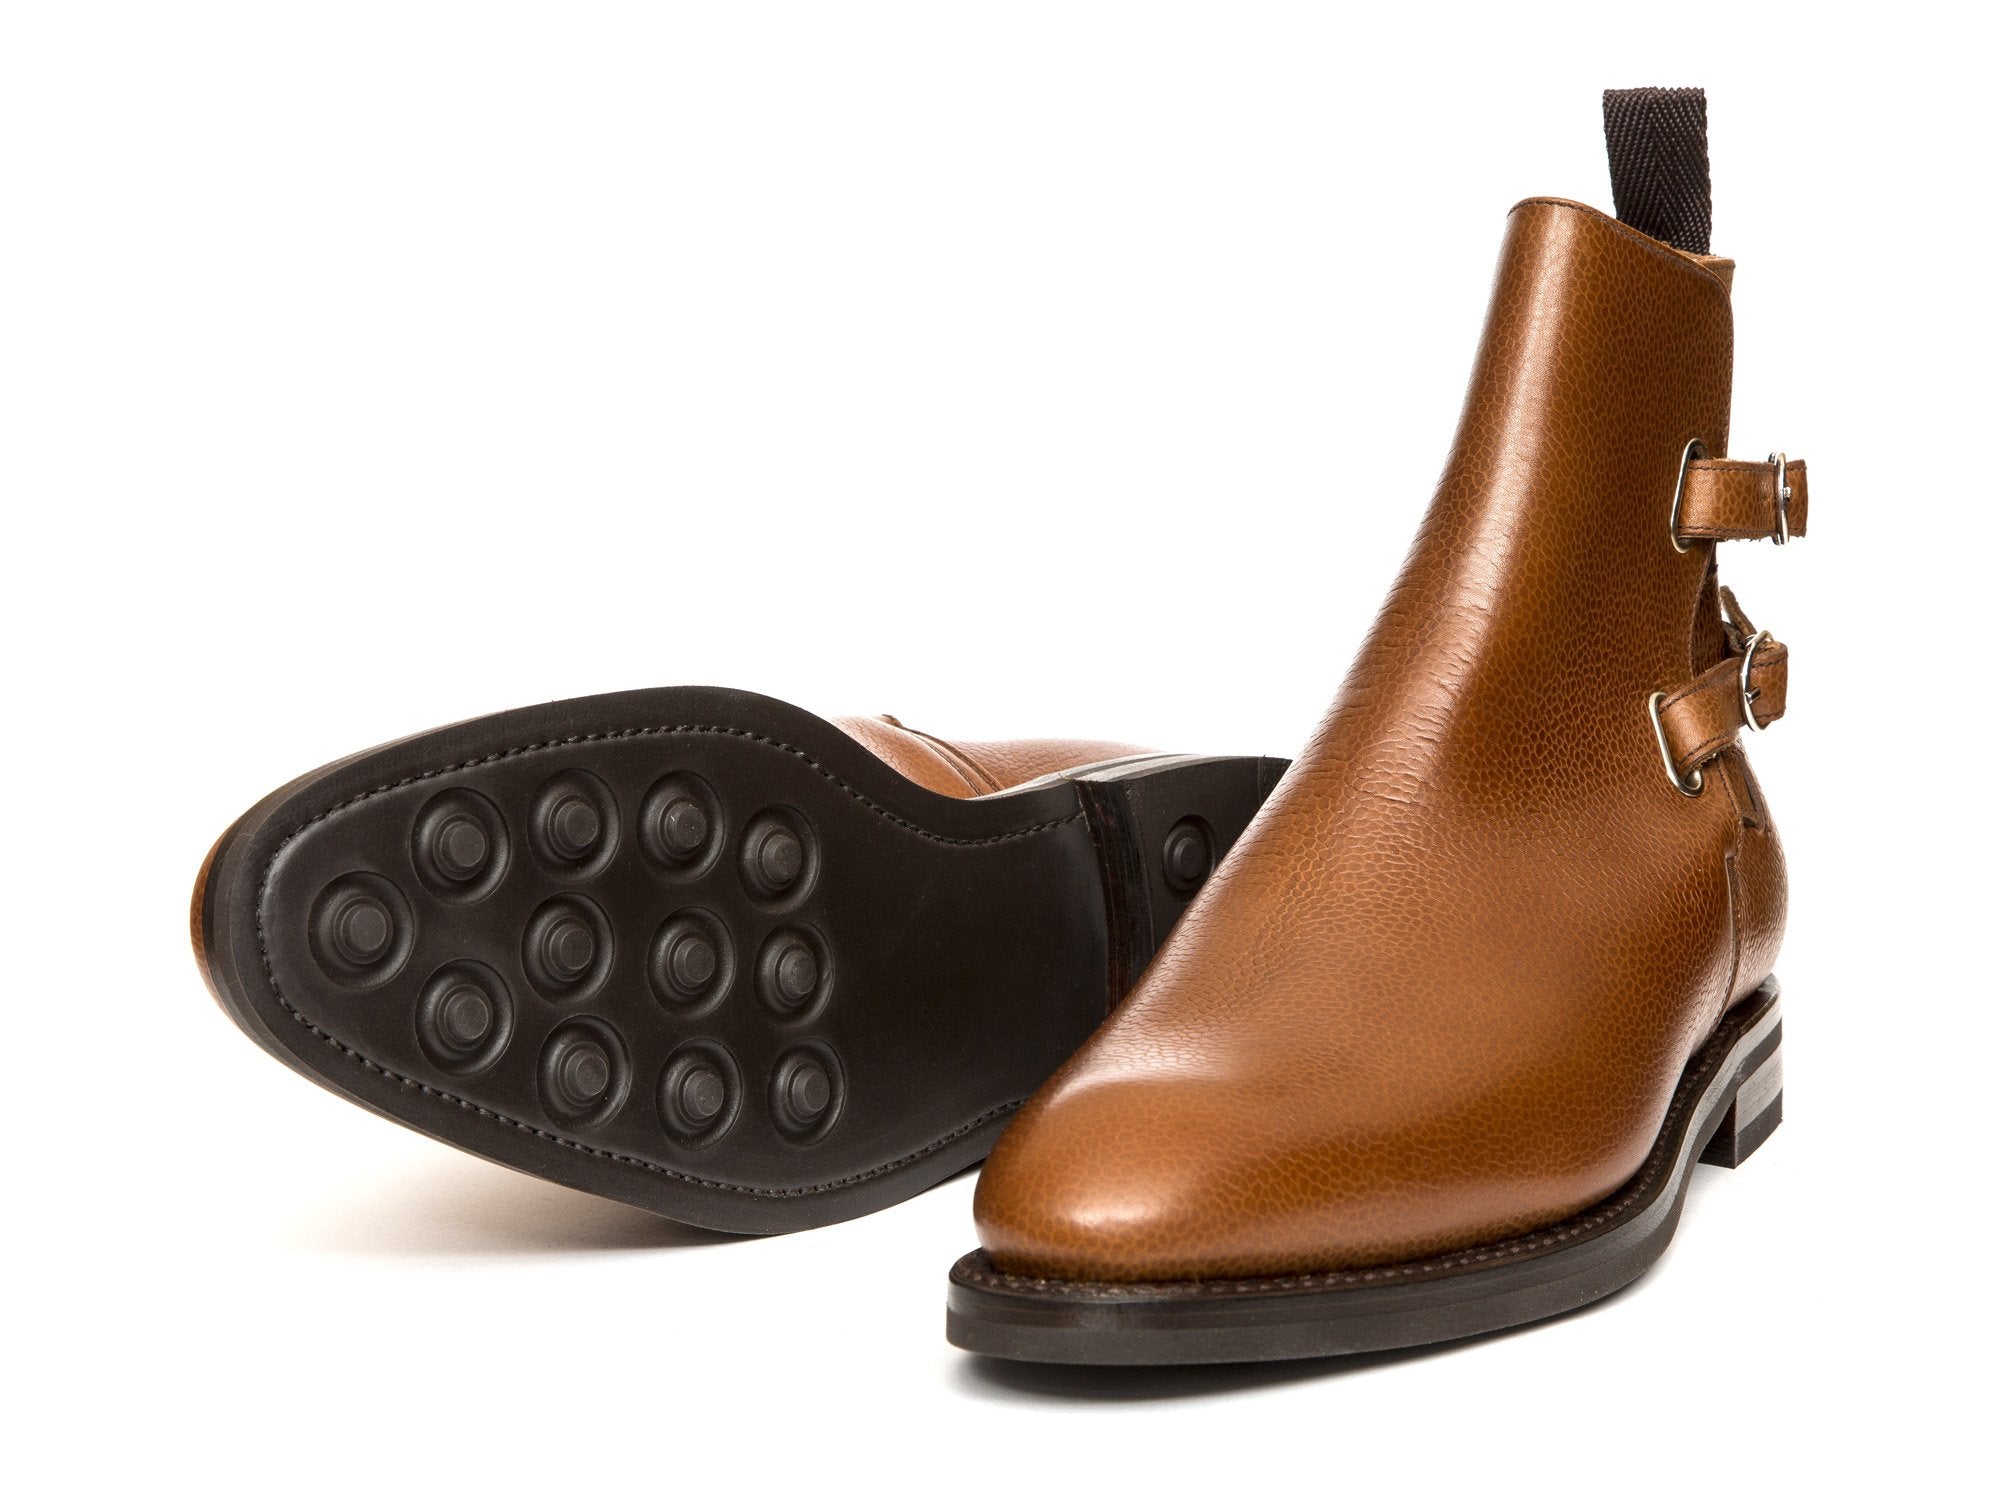 J.FitzPatrick Footwear - Genesee - Tan Soft Grain - Country Rubber Sole - NGT Last